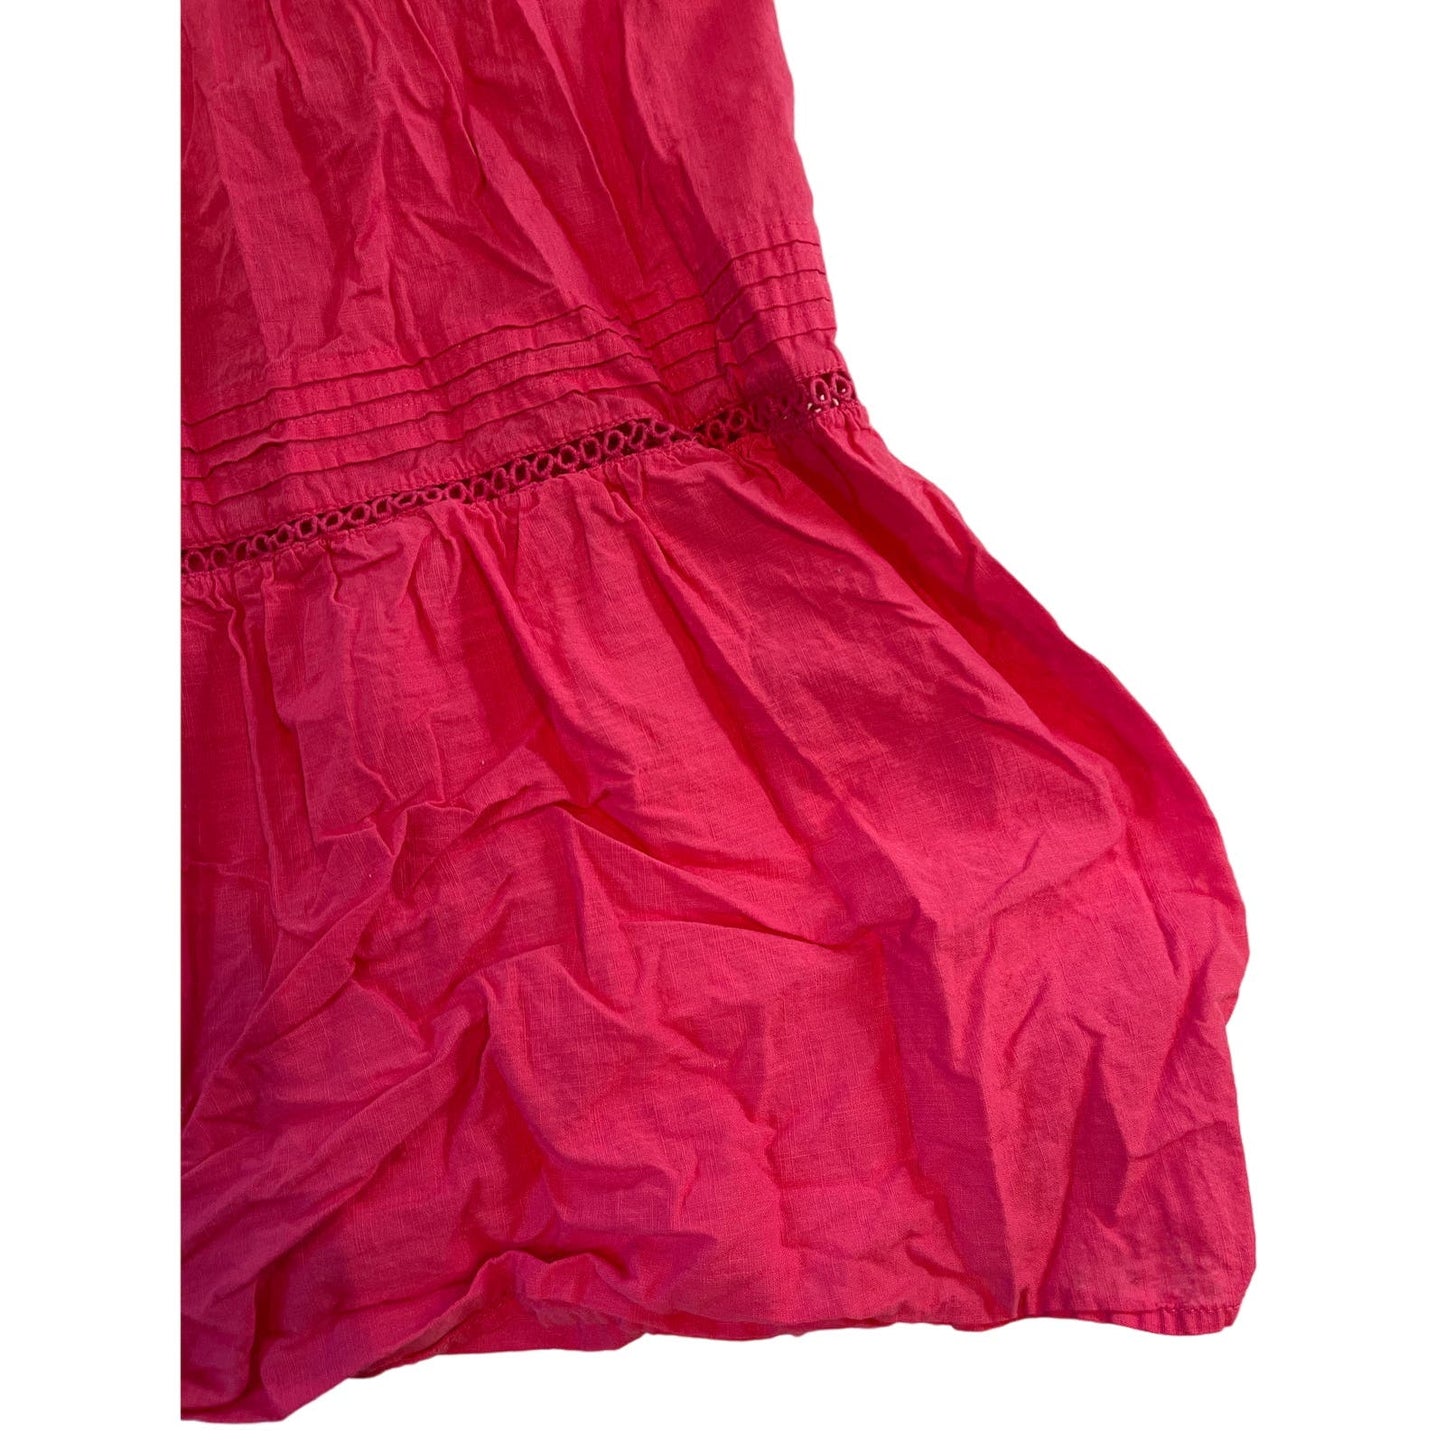 H&M Size 12 Hot Pink Women's Spaghetti Strap Long Maxi Sun Dress